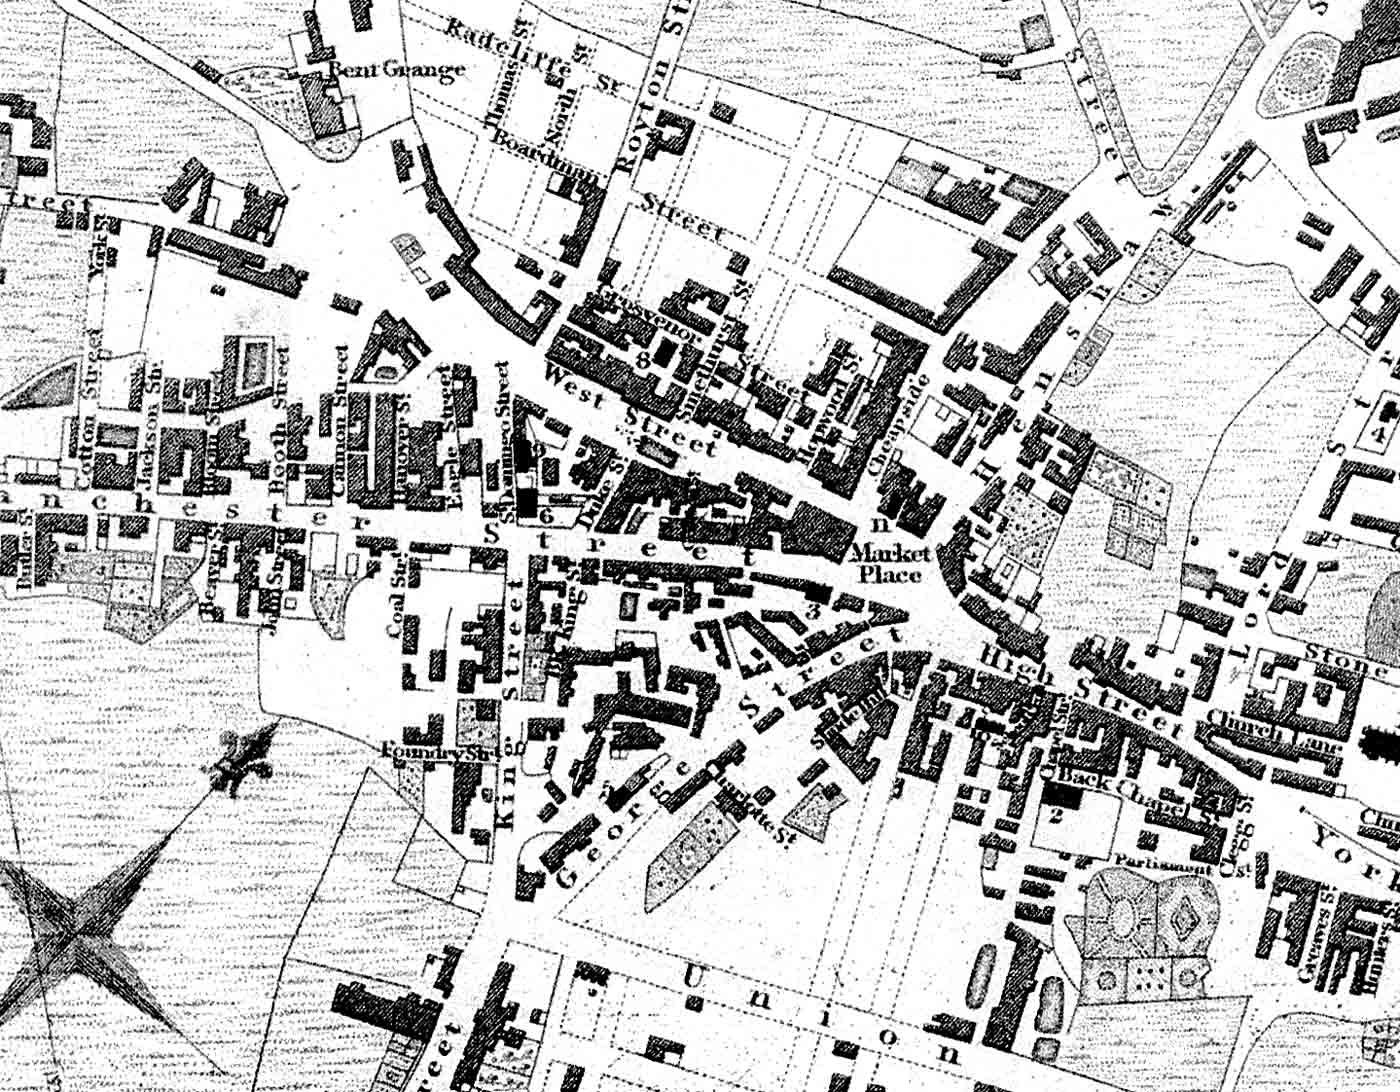 Oldham circa 1824 - more detail